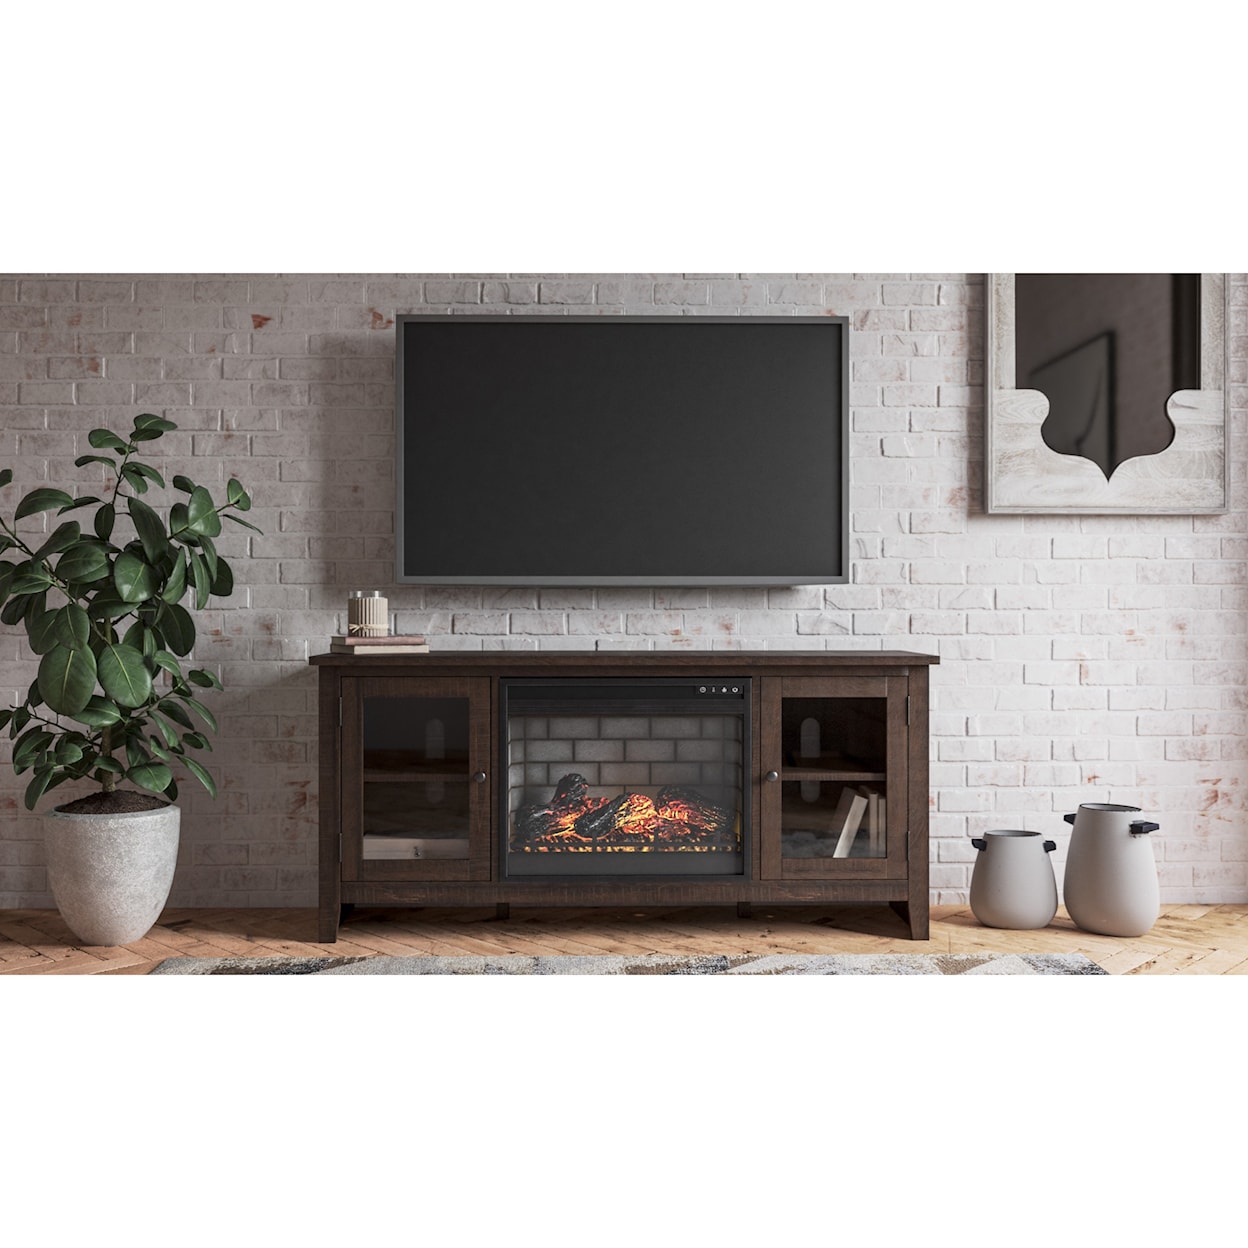 Ashley Furniture Signature Design Camiburg Large TV Stand w/ Fireplace Insert